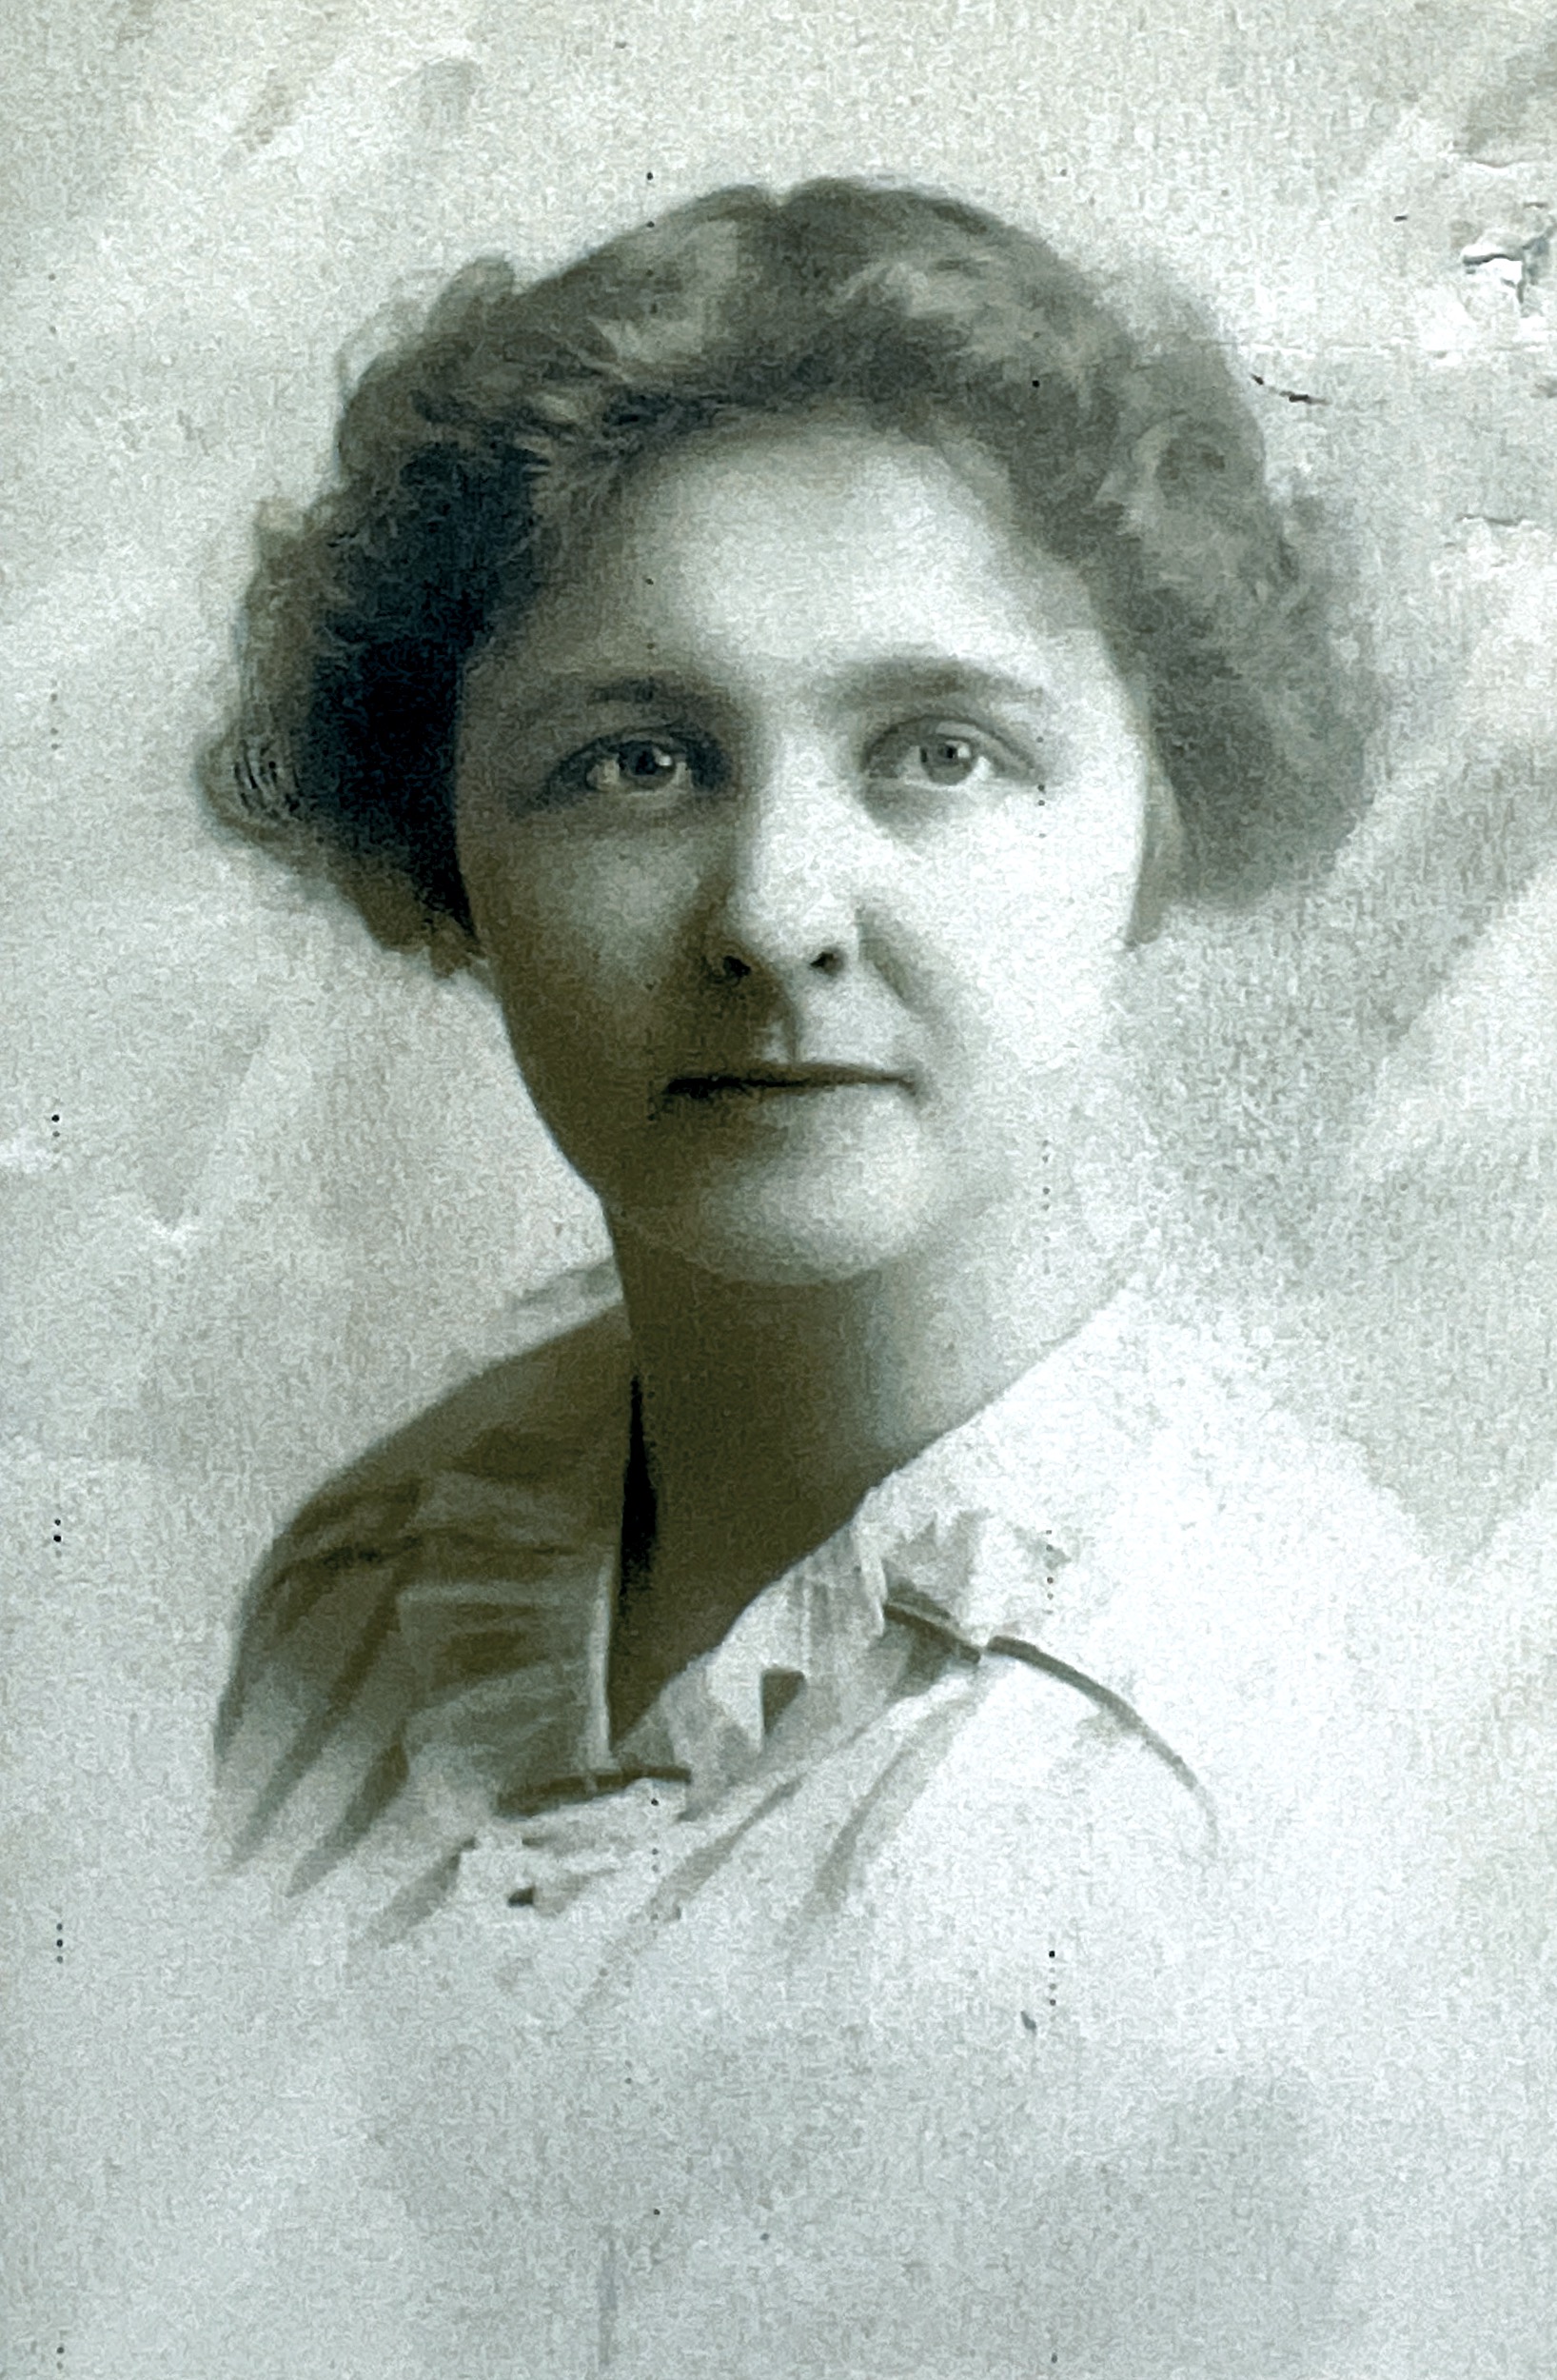 1914 - Gail Unglesby Blatt
Lebanon Normal University